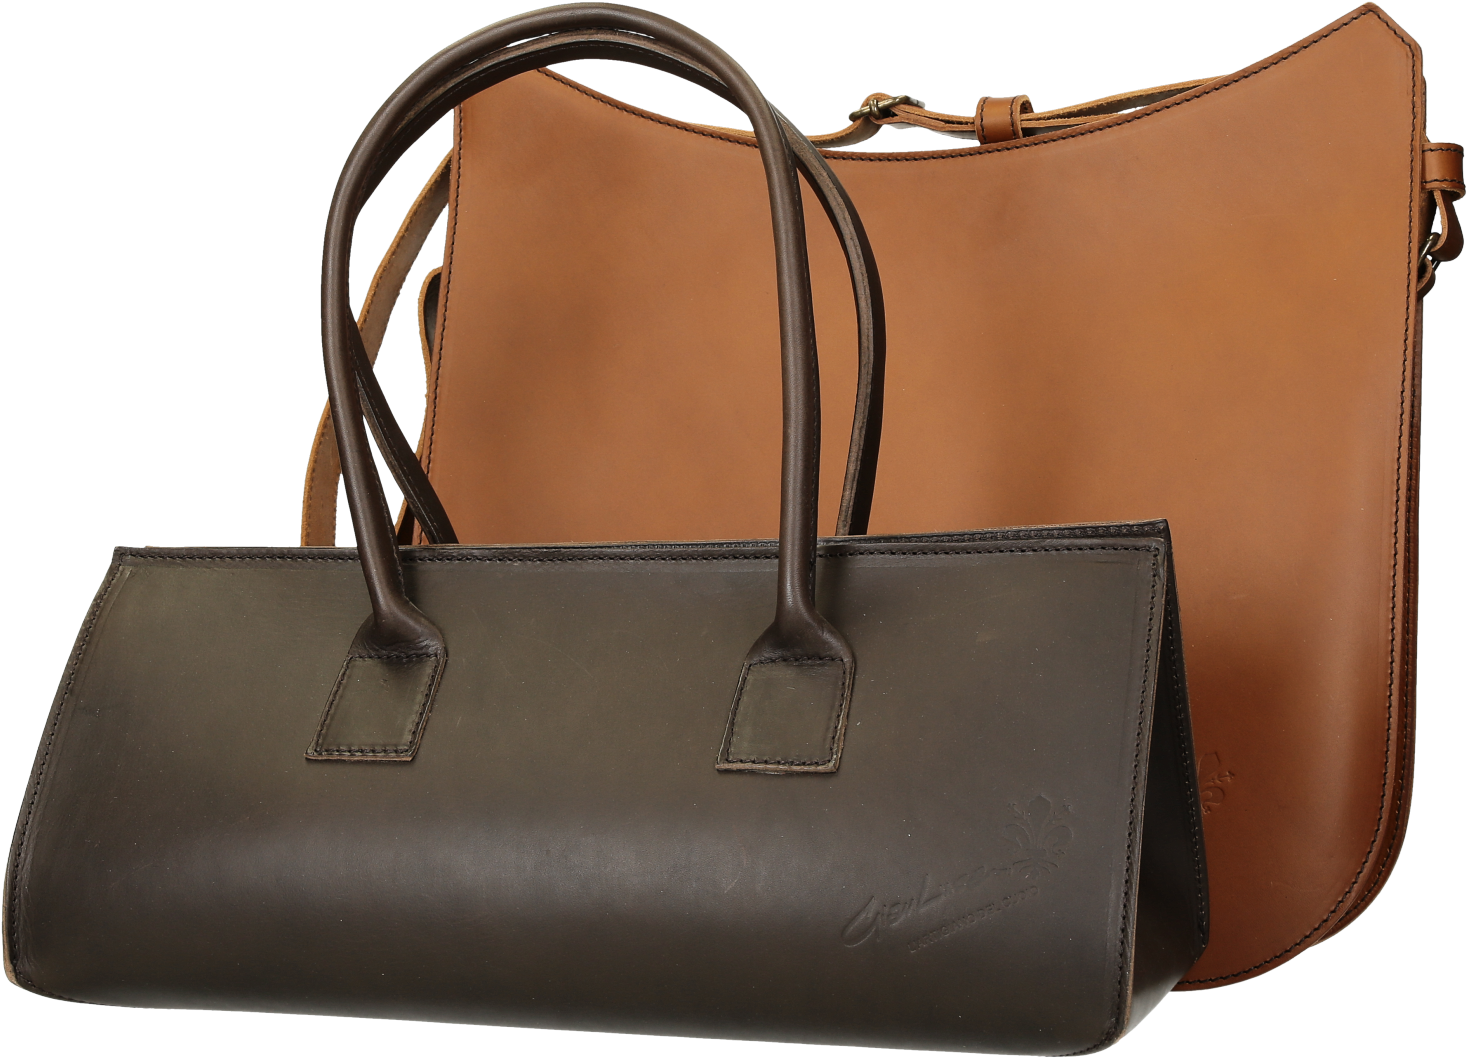 Leather Brown Handbag Photos Download HD PNG Image